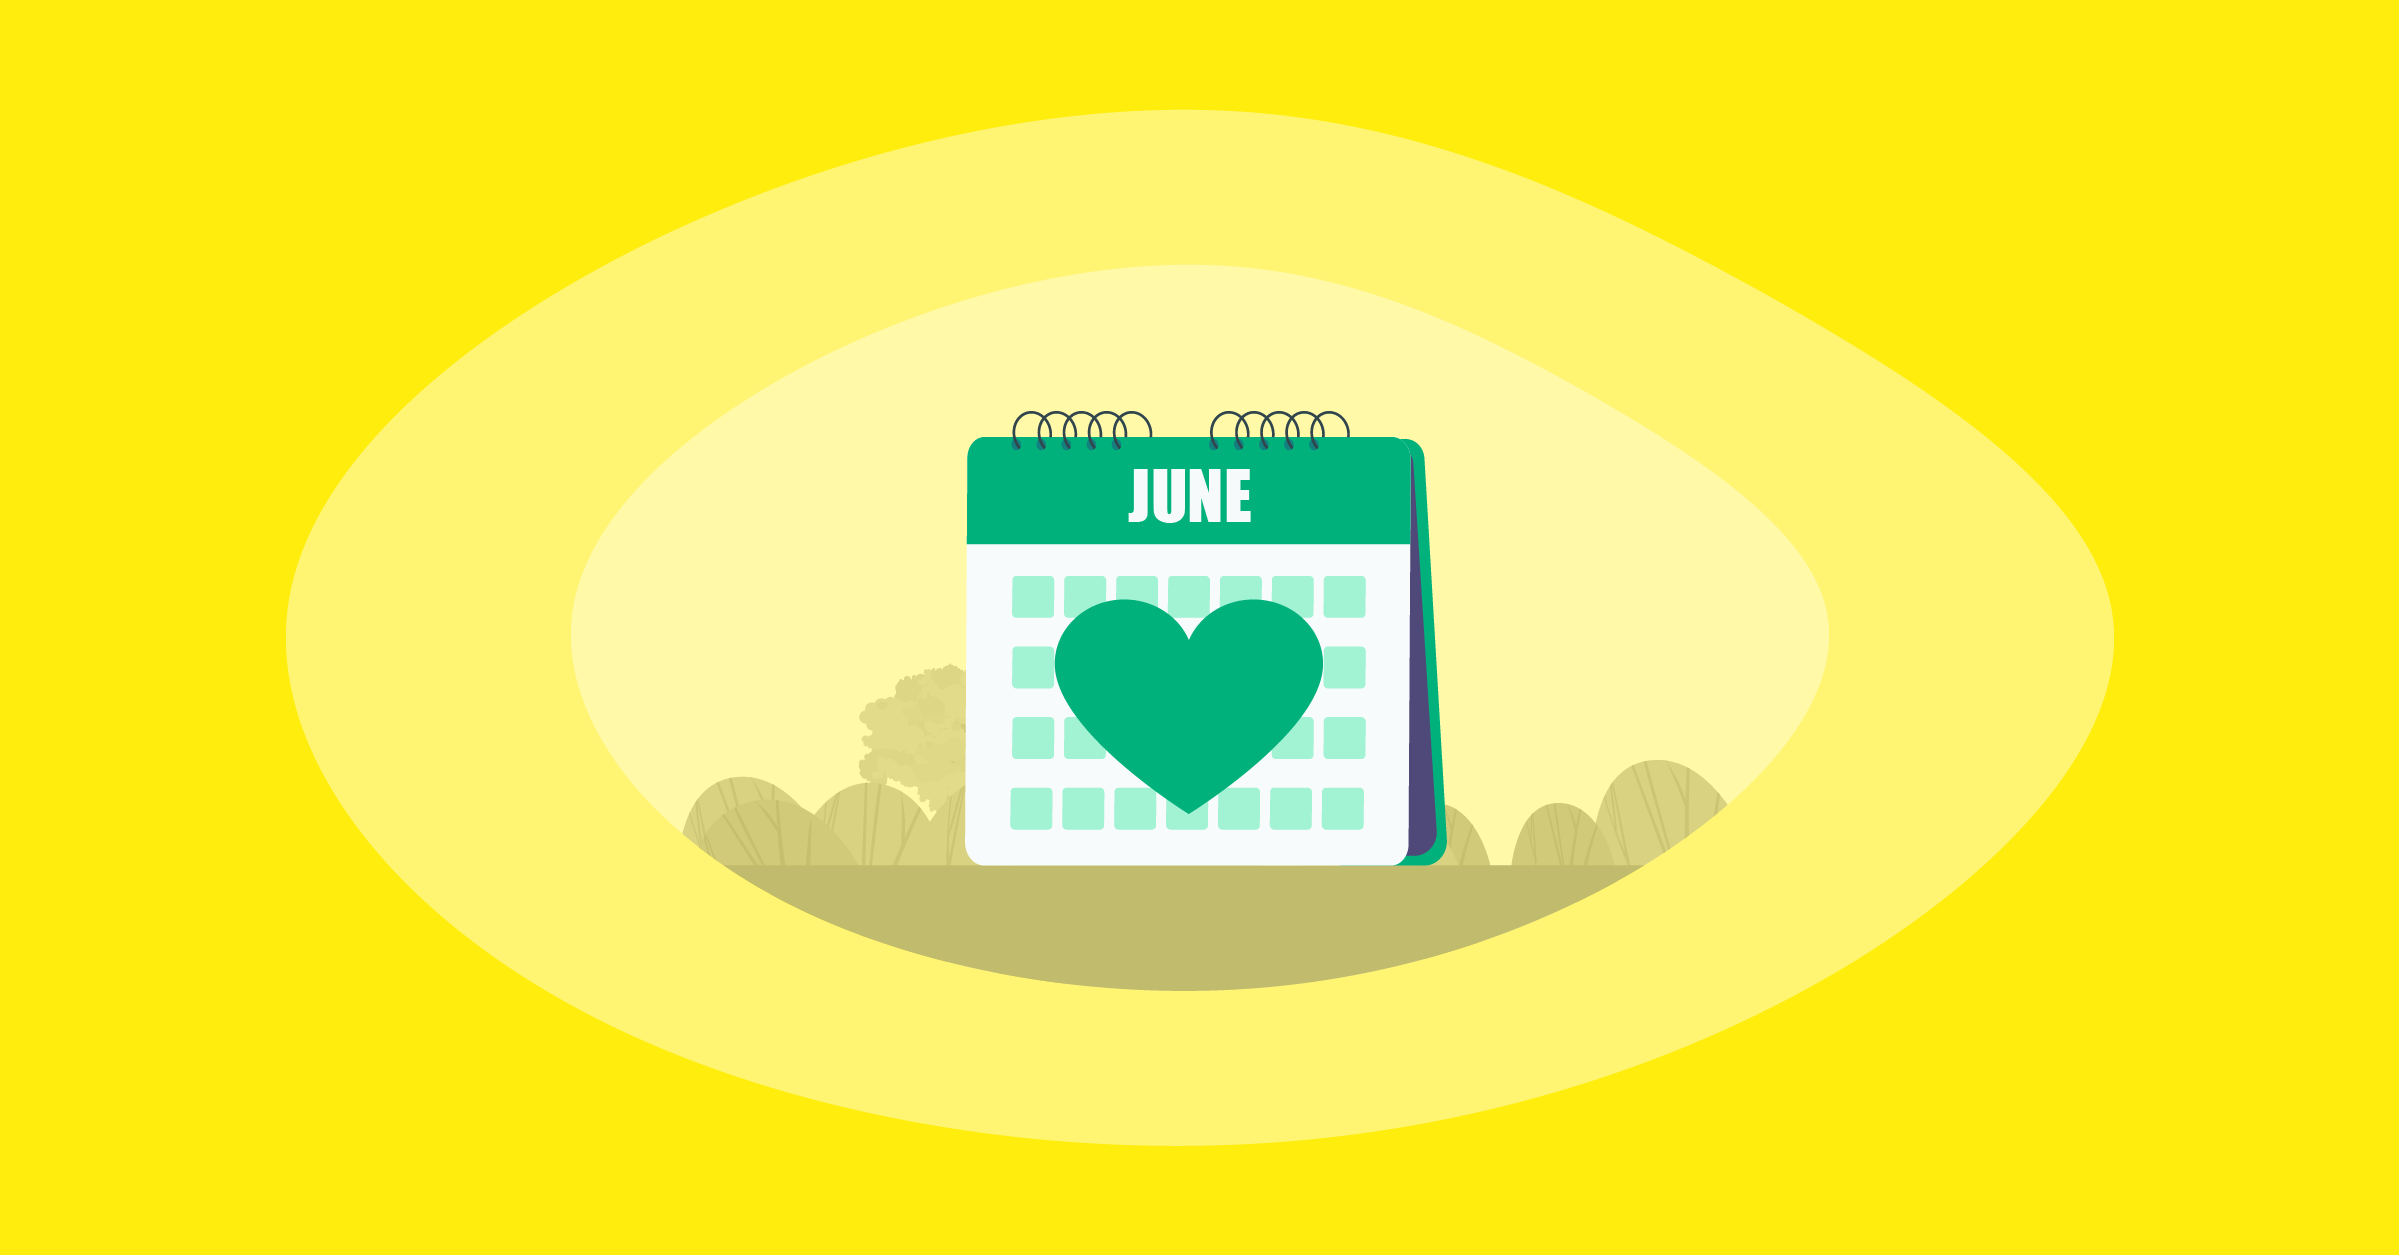 Illustration of an awareness calendar for June